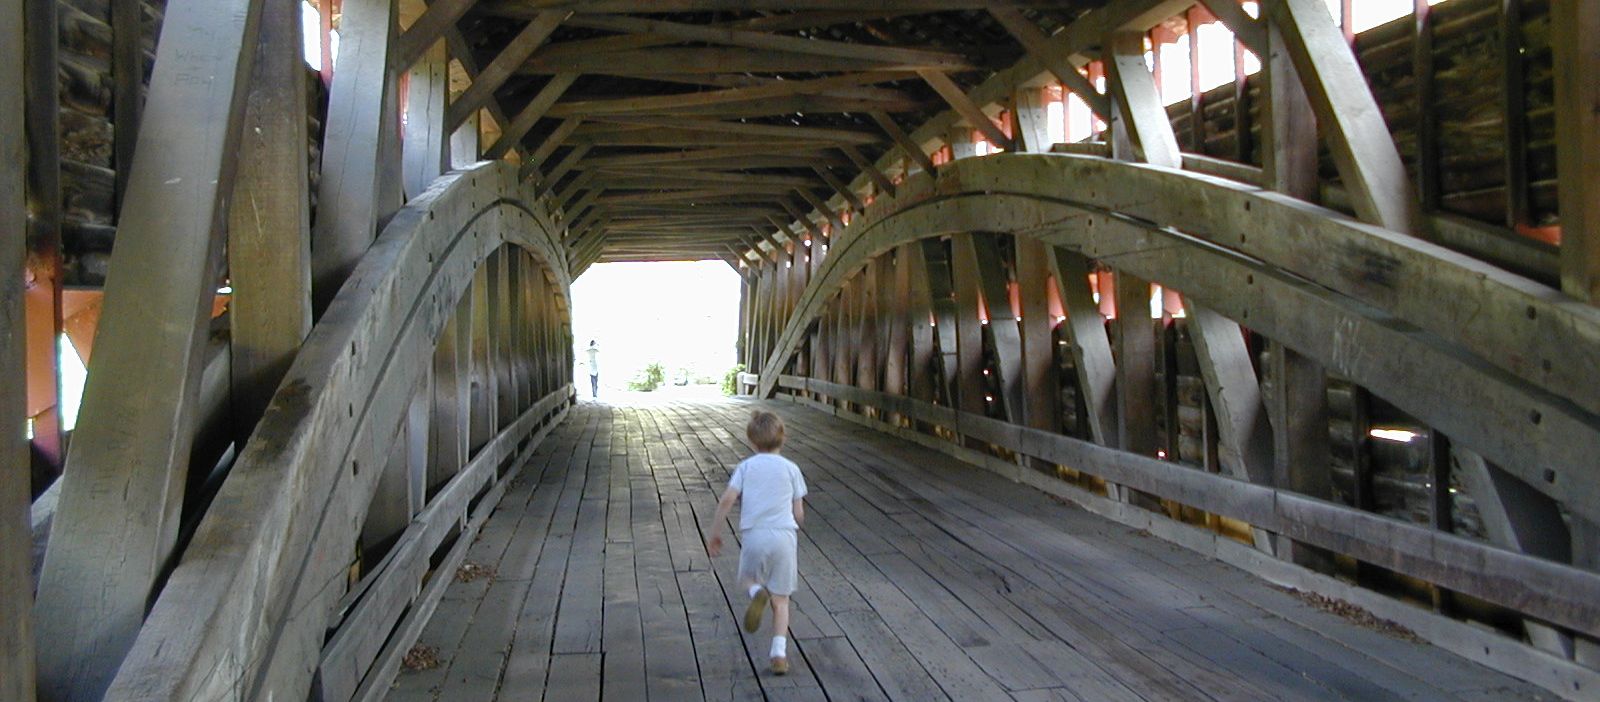 The Dreibelbis Station Bridge is a classic Burr arch truss covered bridge spanning Maiden Creek south of Lenhartsville, Pennsylvania.